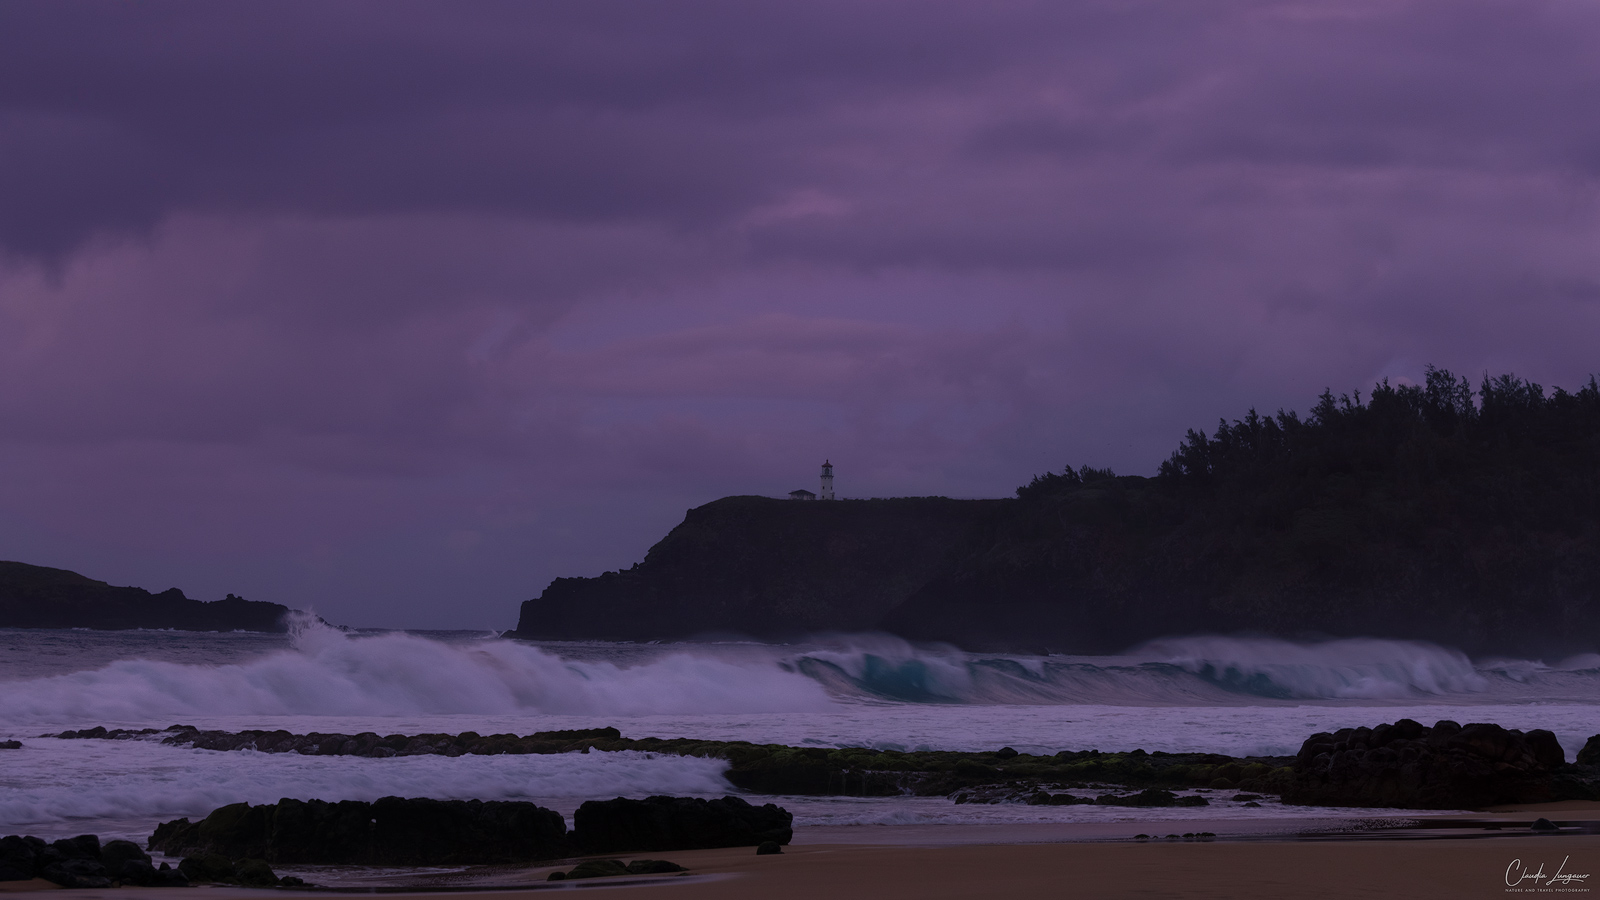 Big waves at Secret Beach, Kauai in Hawaii with Kilaulea lighthouse in the background.